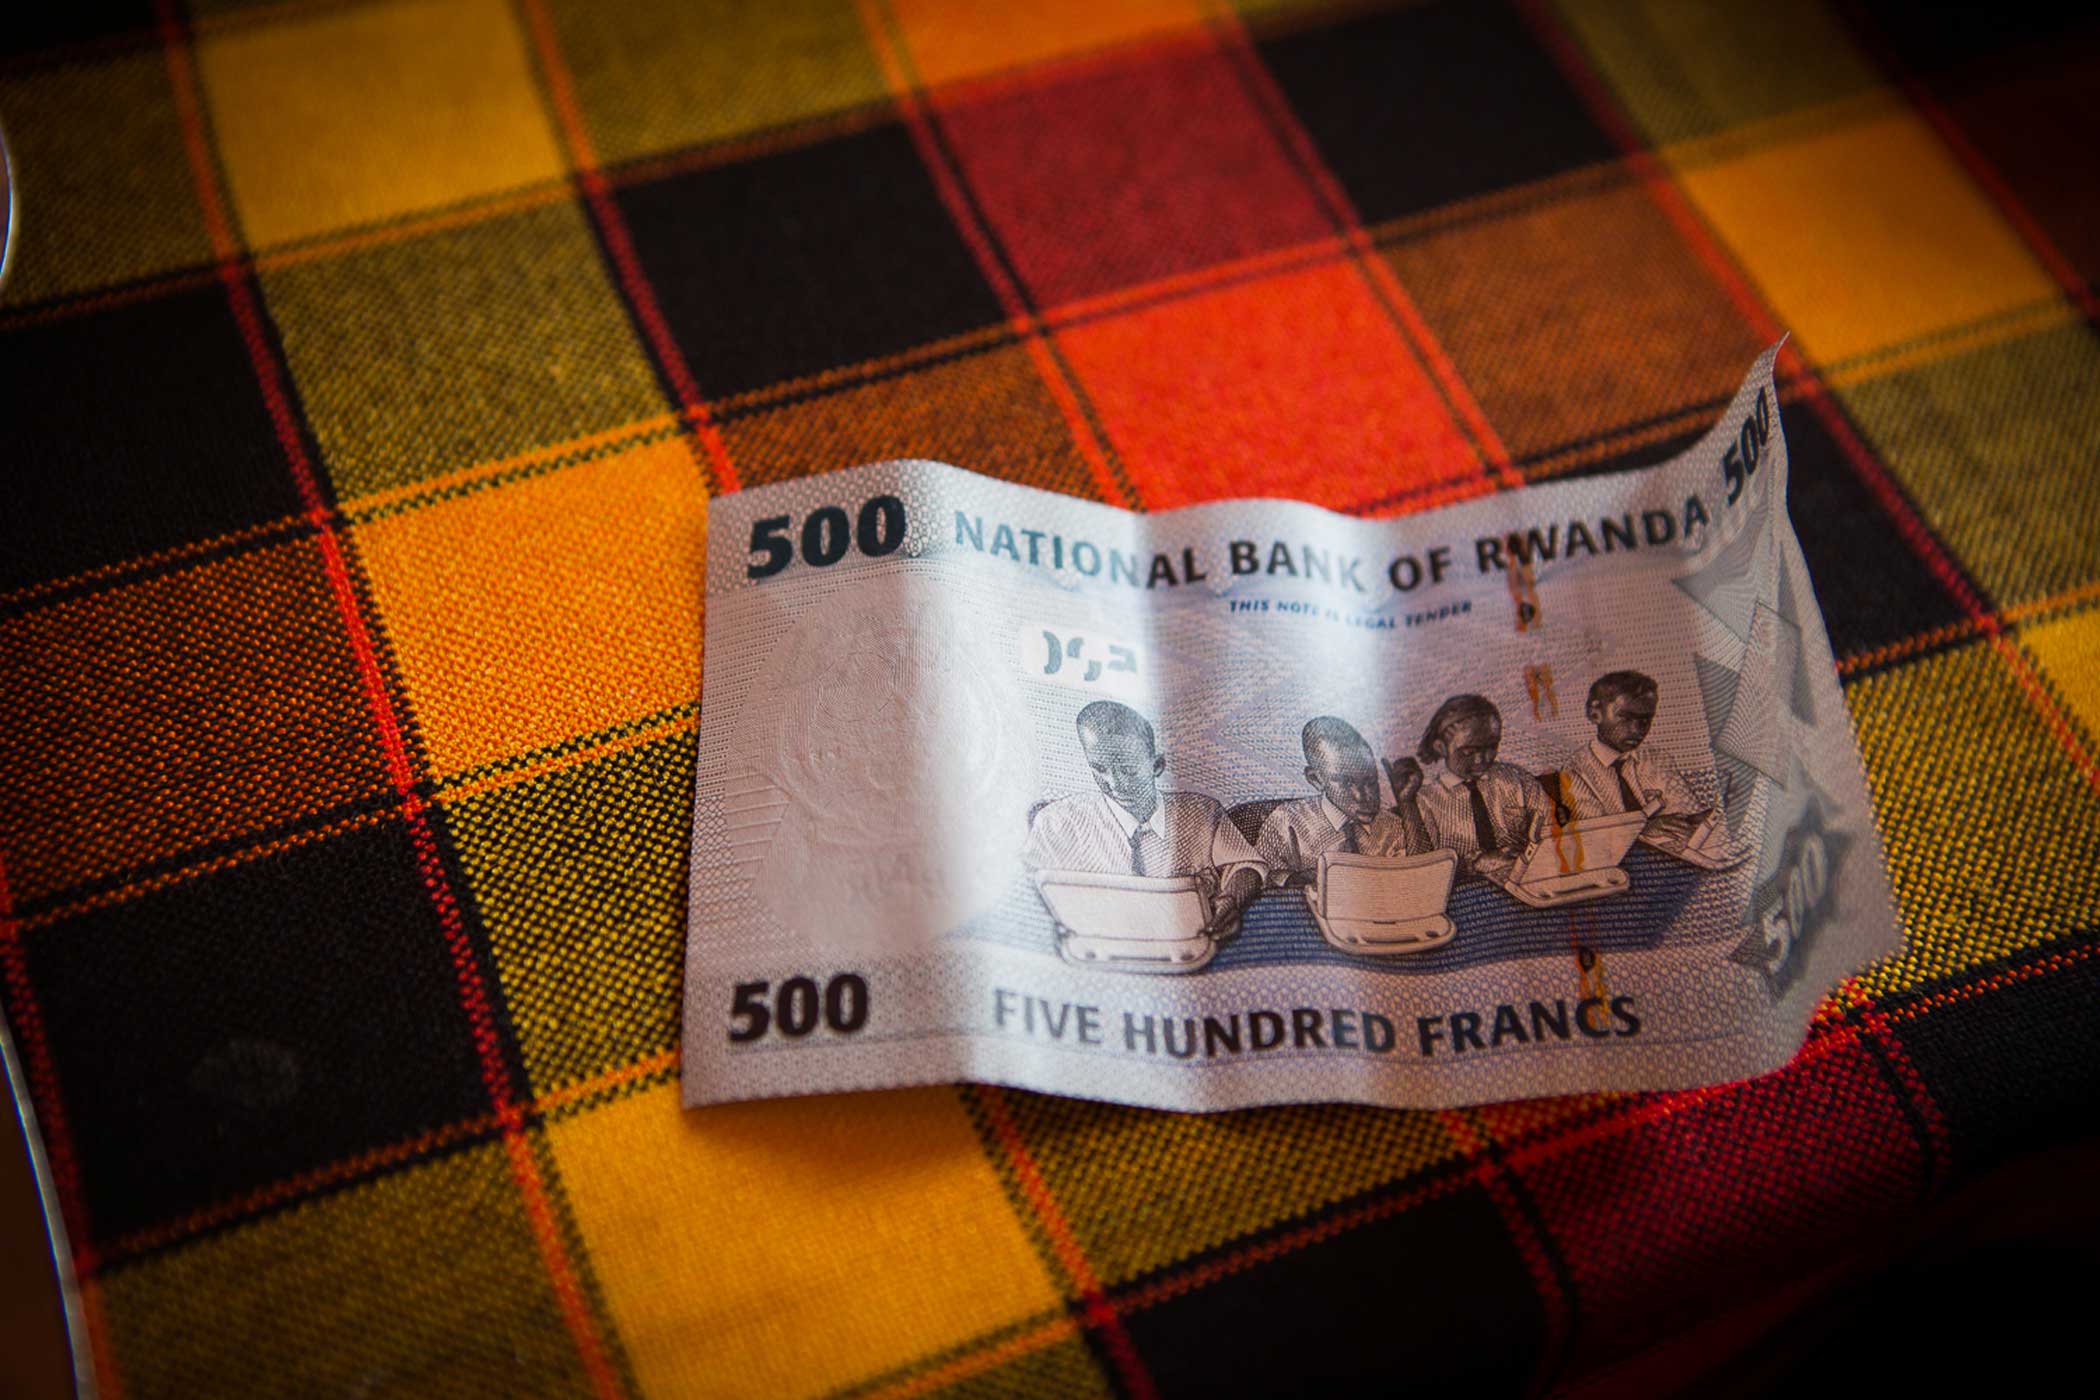 The Rwandan five hundred francs bill features students on laptops, representing the one laptop a child movement. (Cassandra Giraldo)